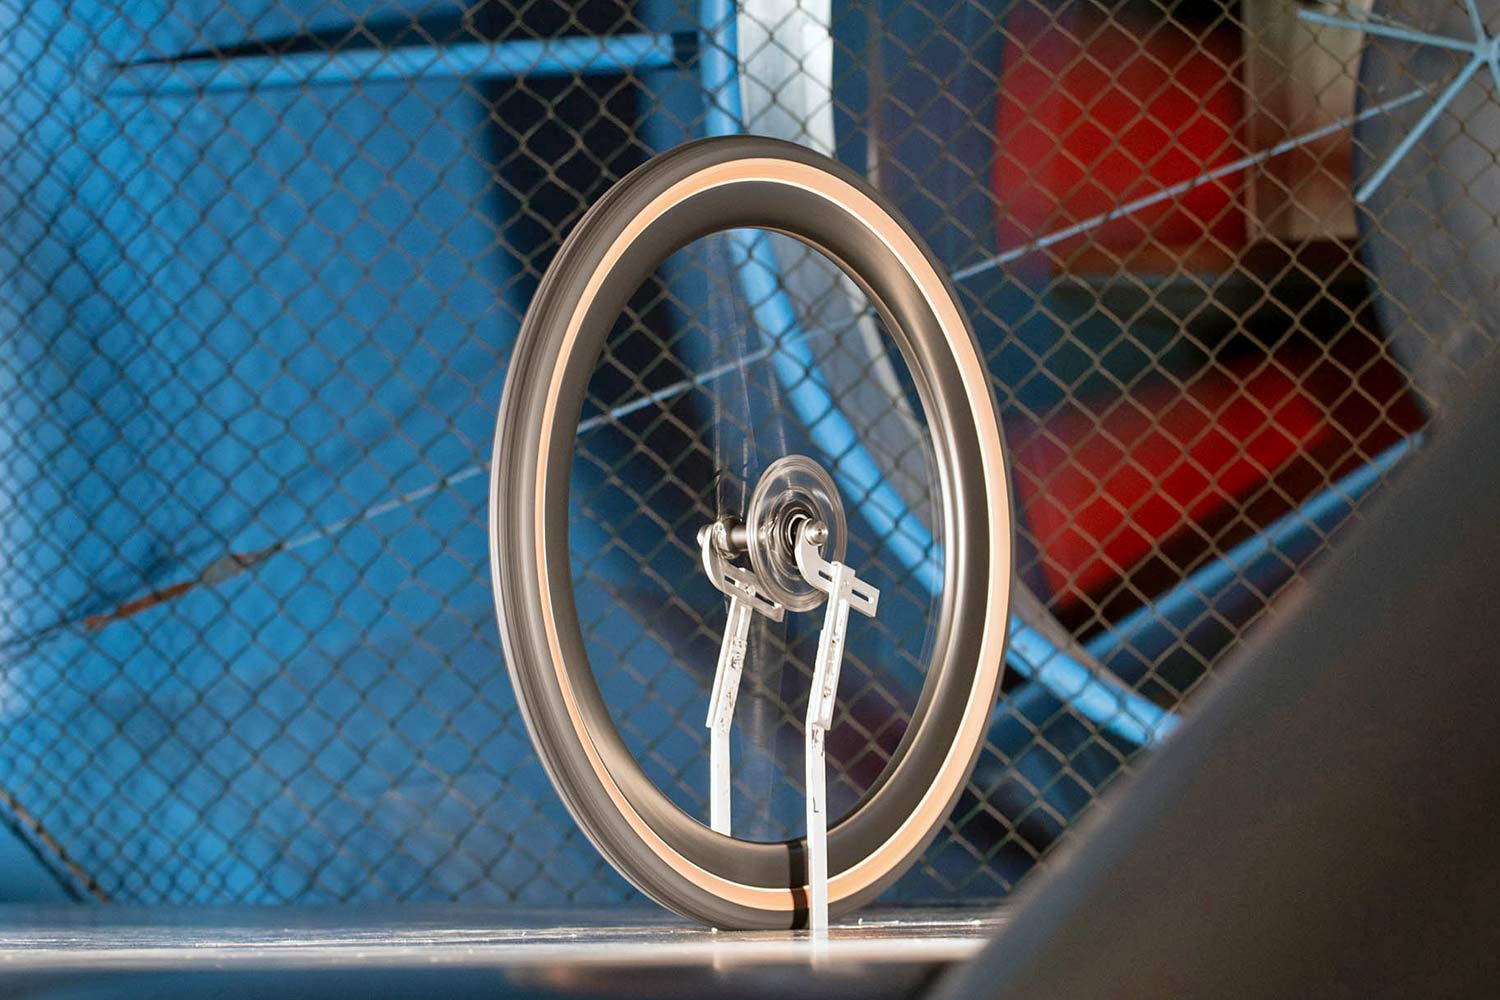 DT Swiss Gravel road wheel lineup, 650b & 700c, 24mm internal width, GRC 1400 Spline 42 aero carbon gravel bike wheels